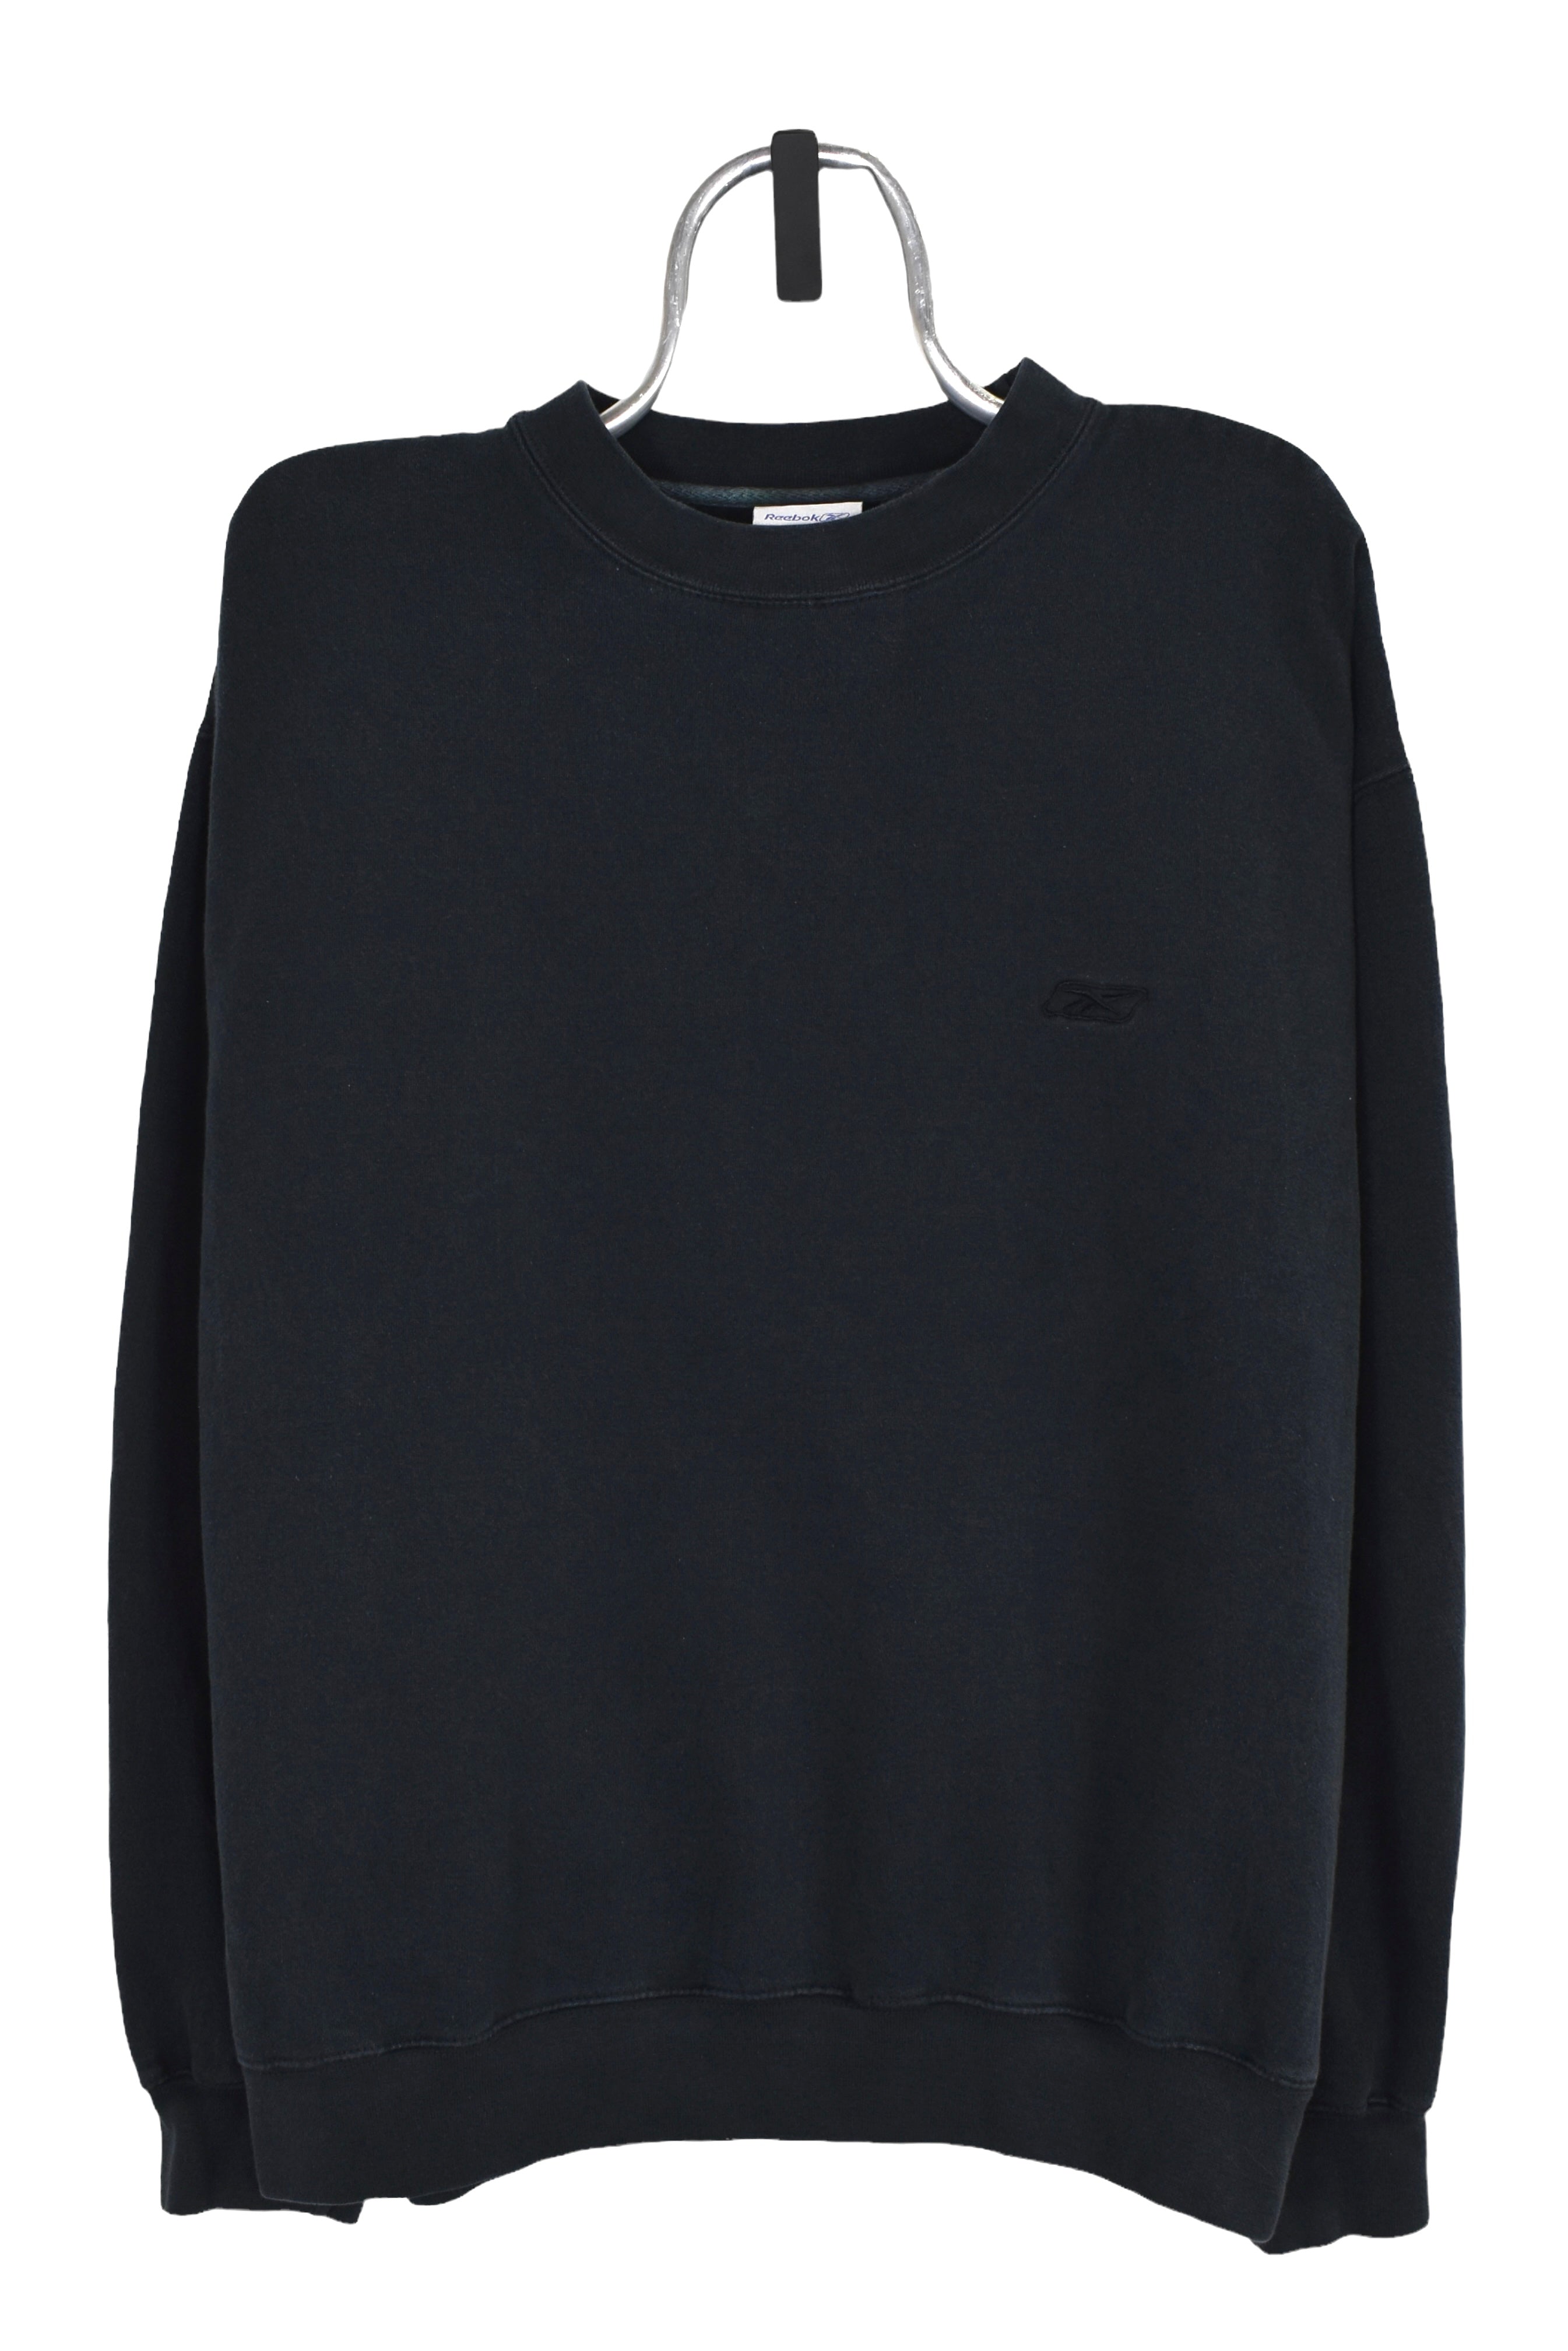 Vintage Reebok sweatshirt (2XL), black embroidered crewneck